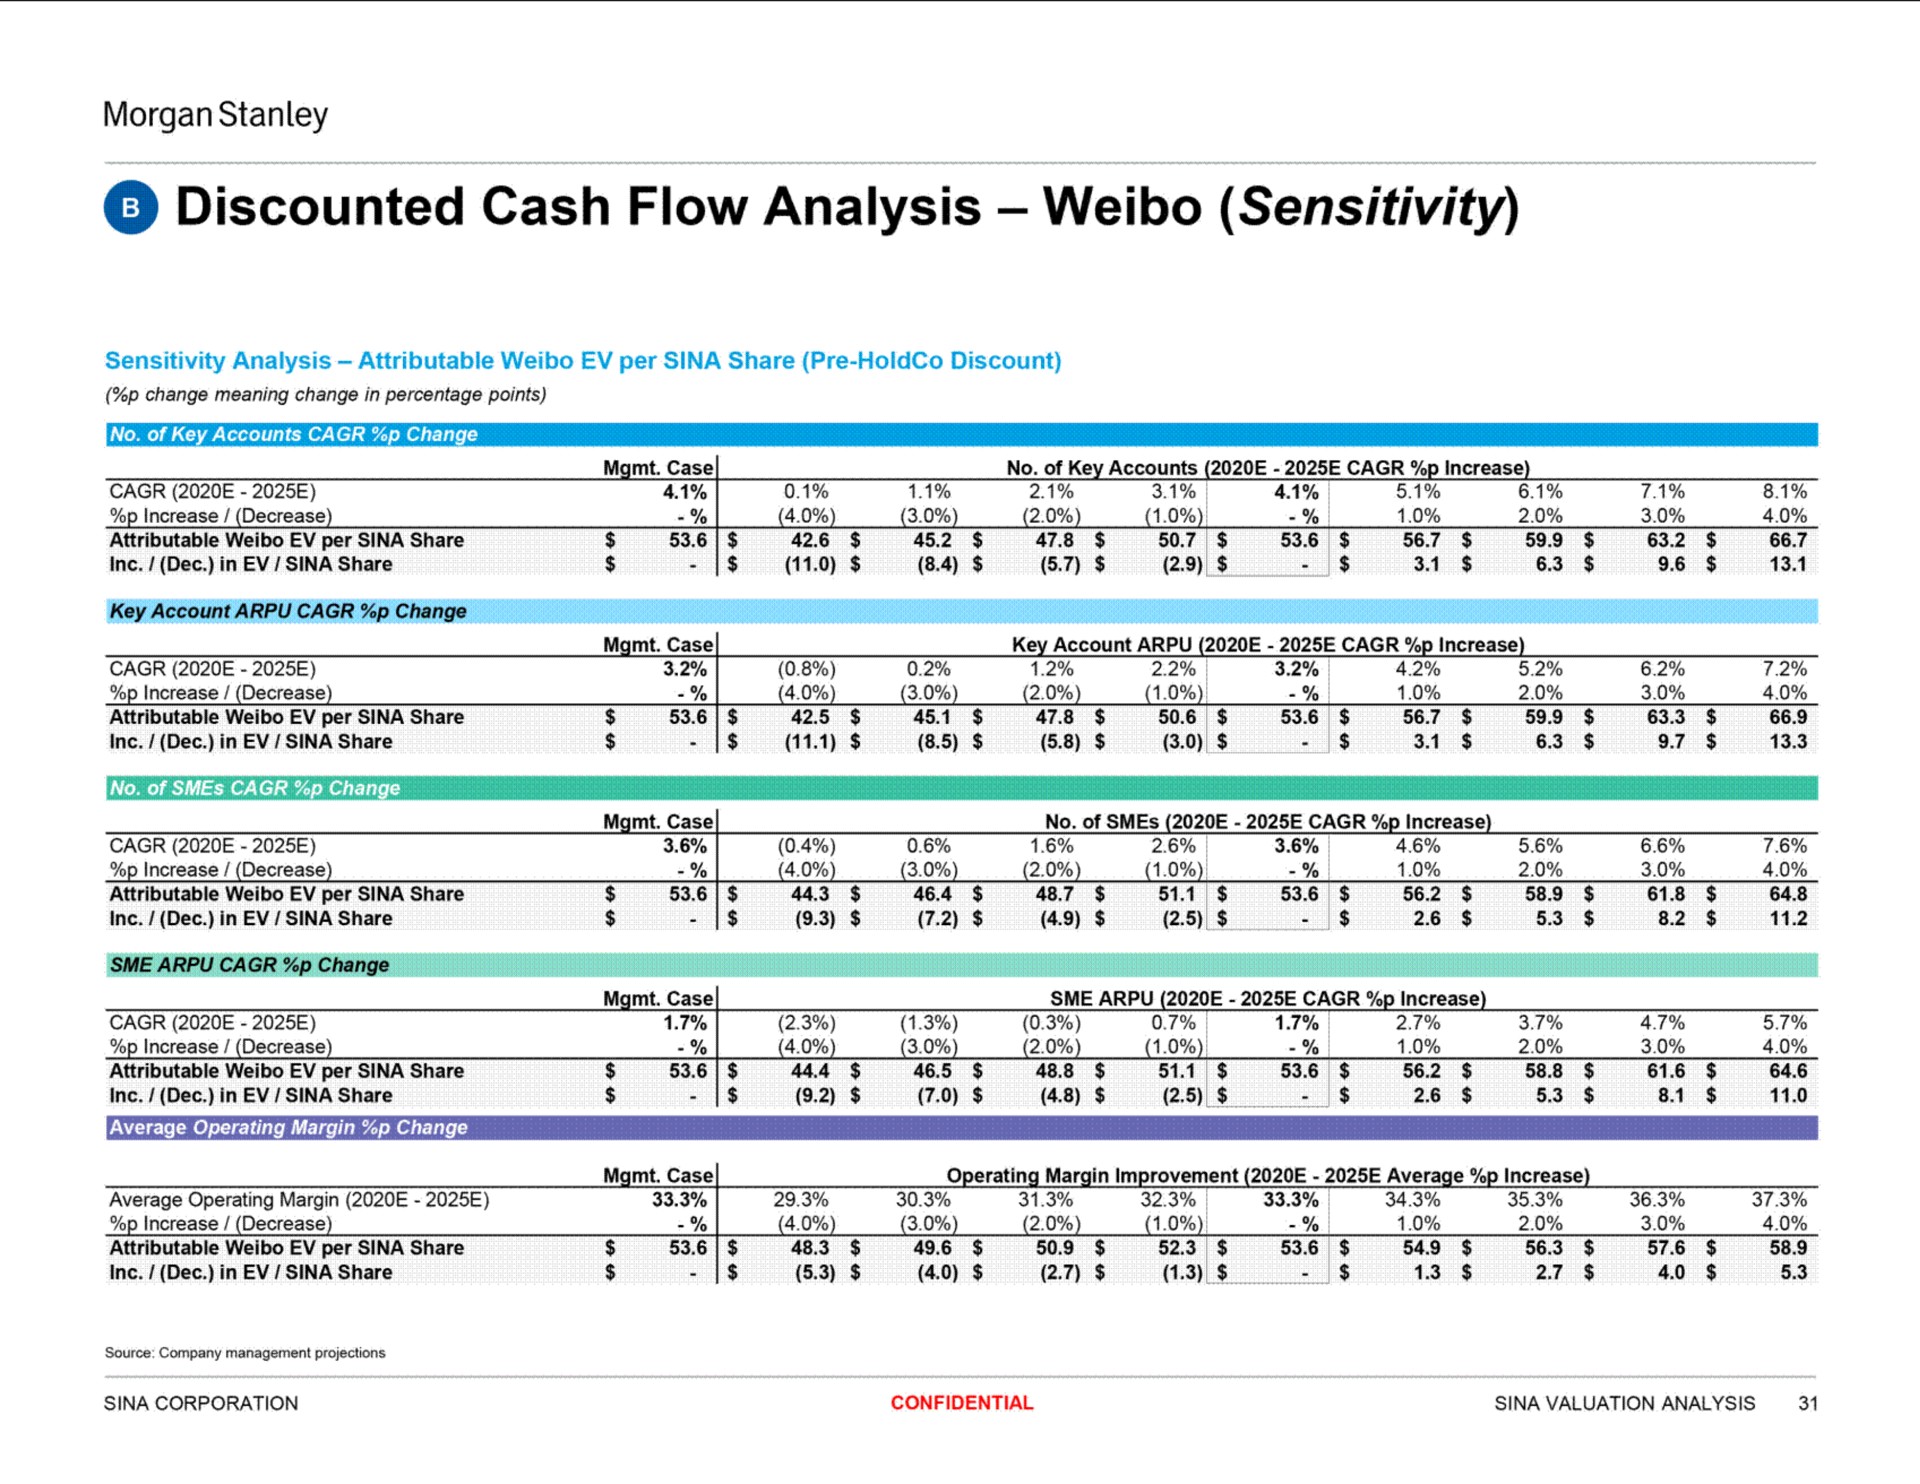 discounted cash flow analysis sensitivity | Morgan Stanley